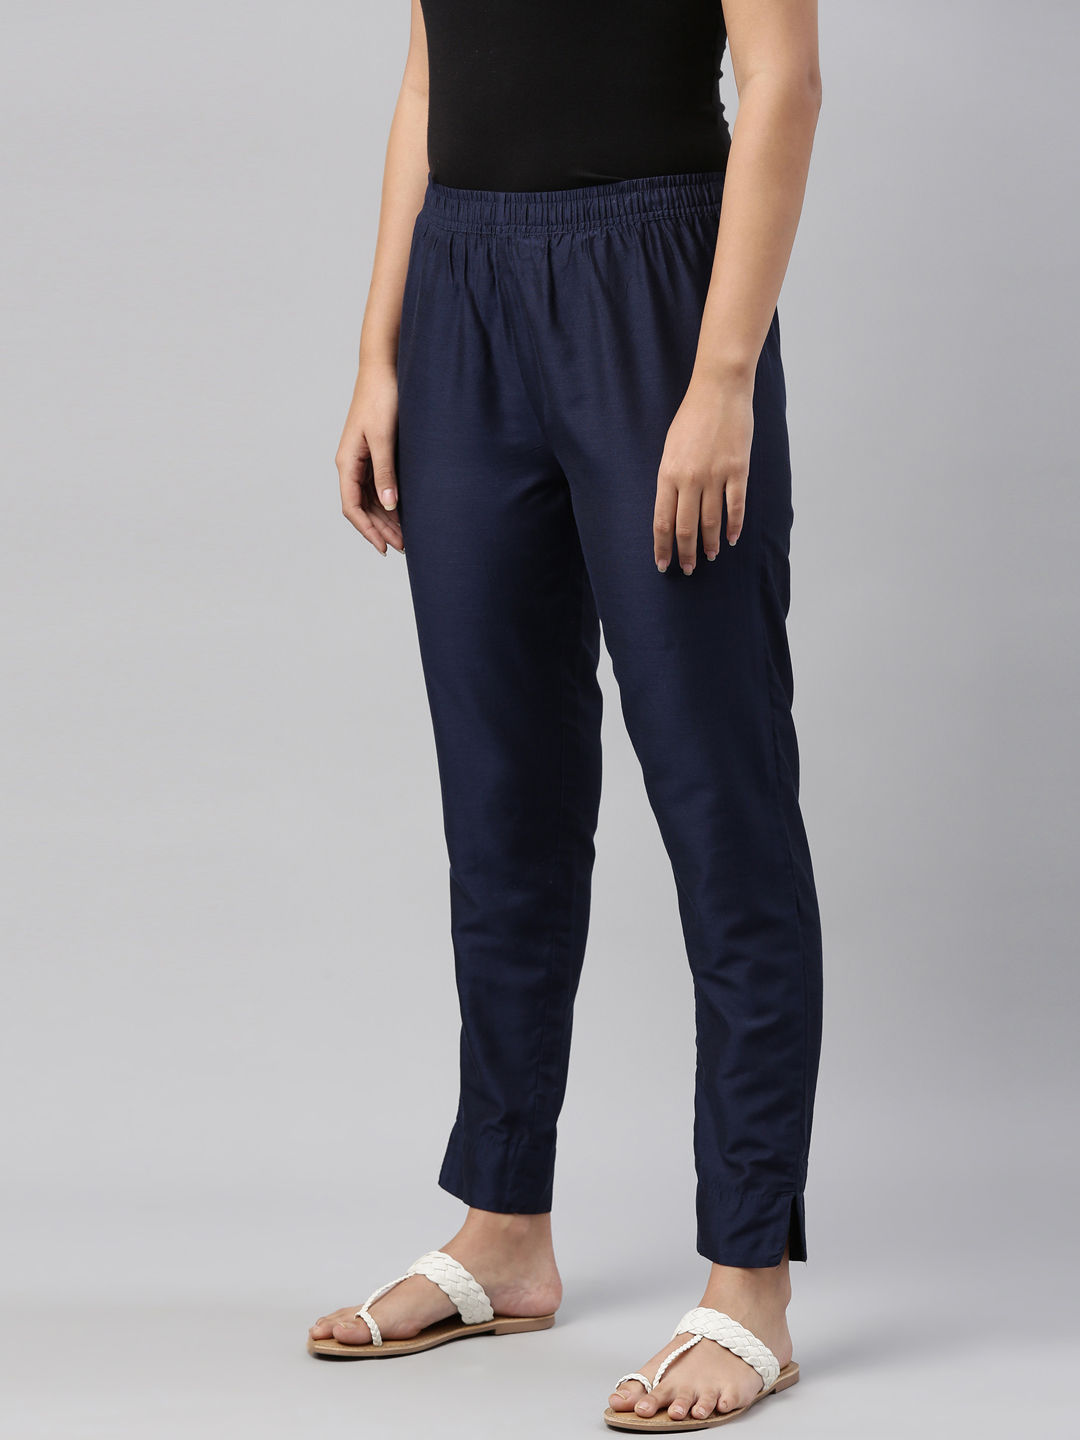 womens navy blue pants: Women's Plus Size Clothing | Dillard's